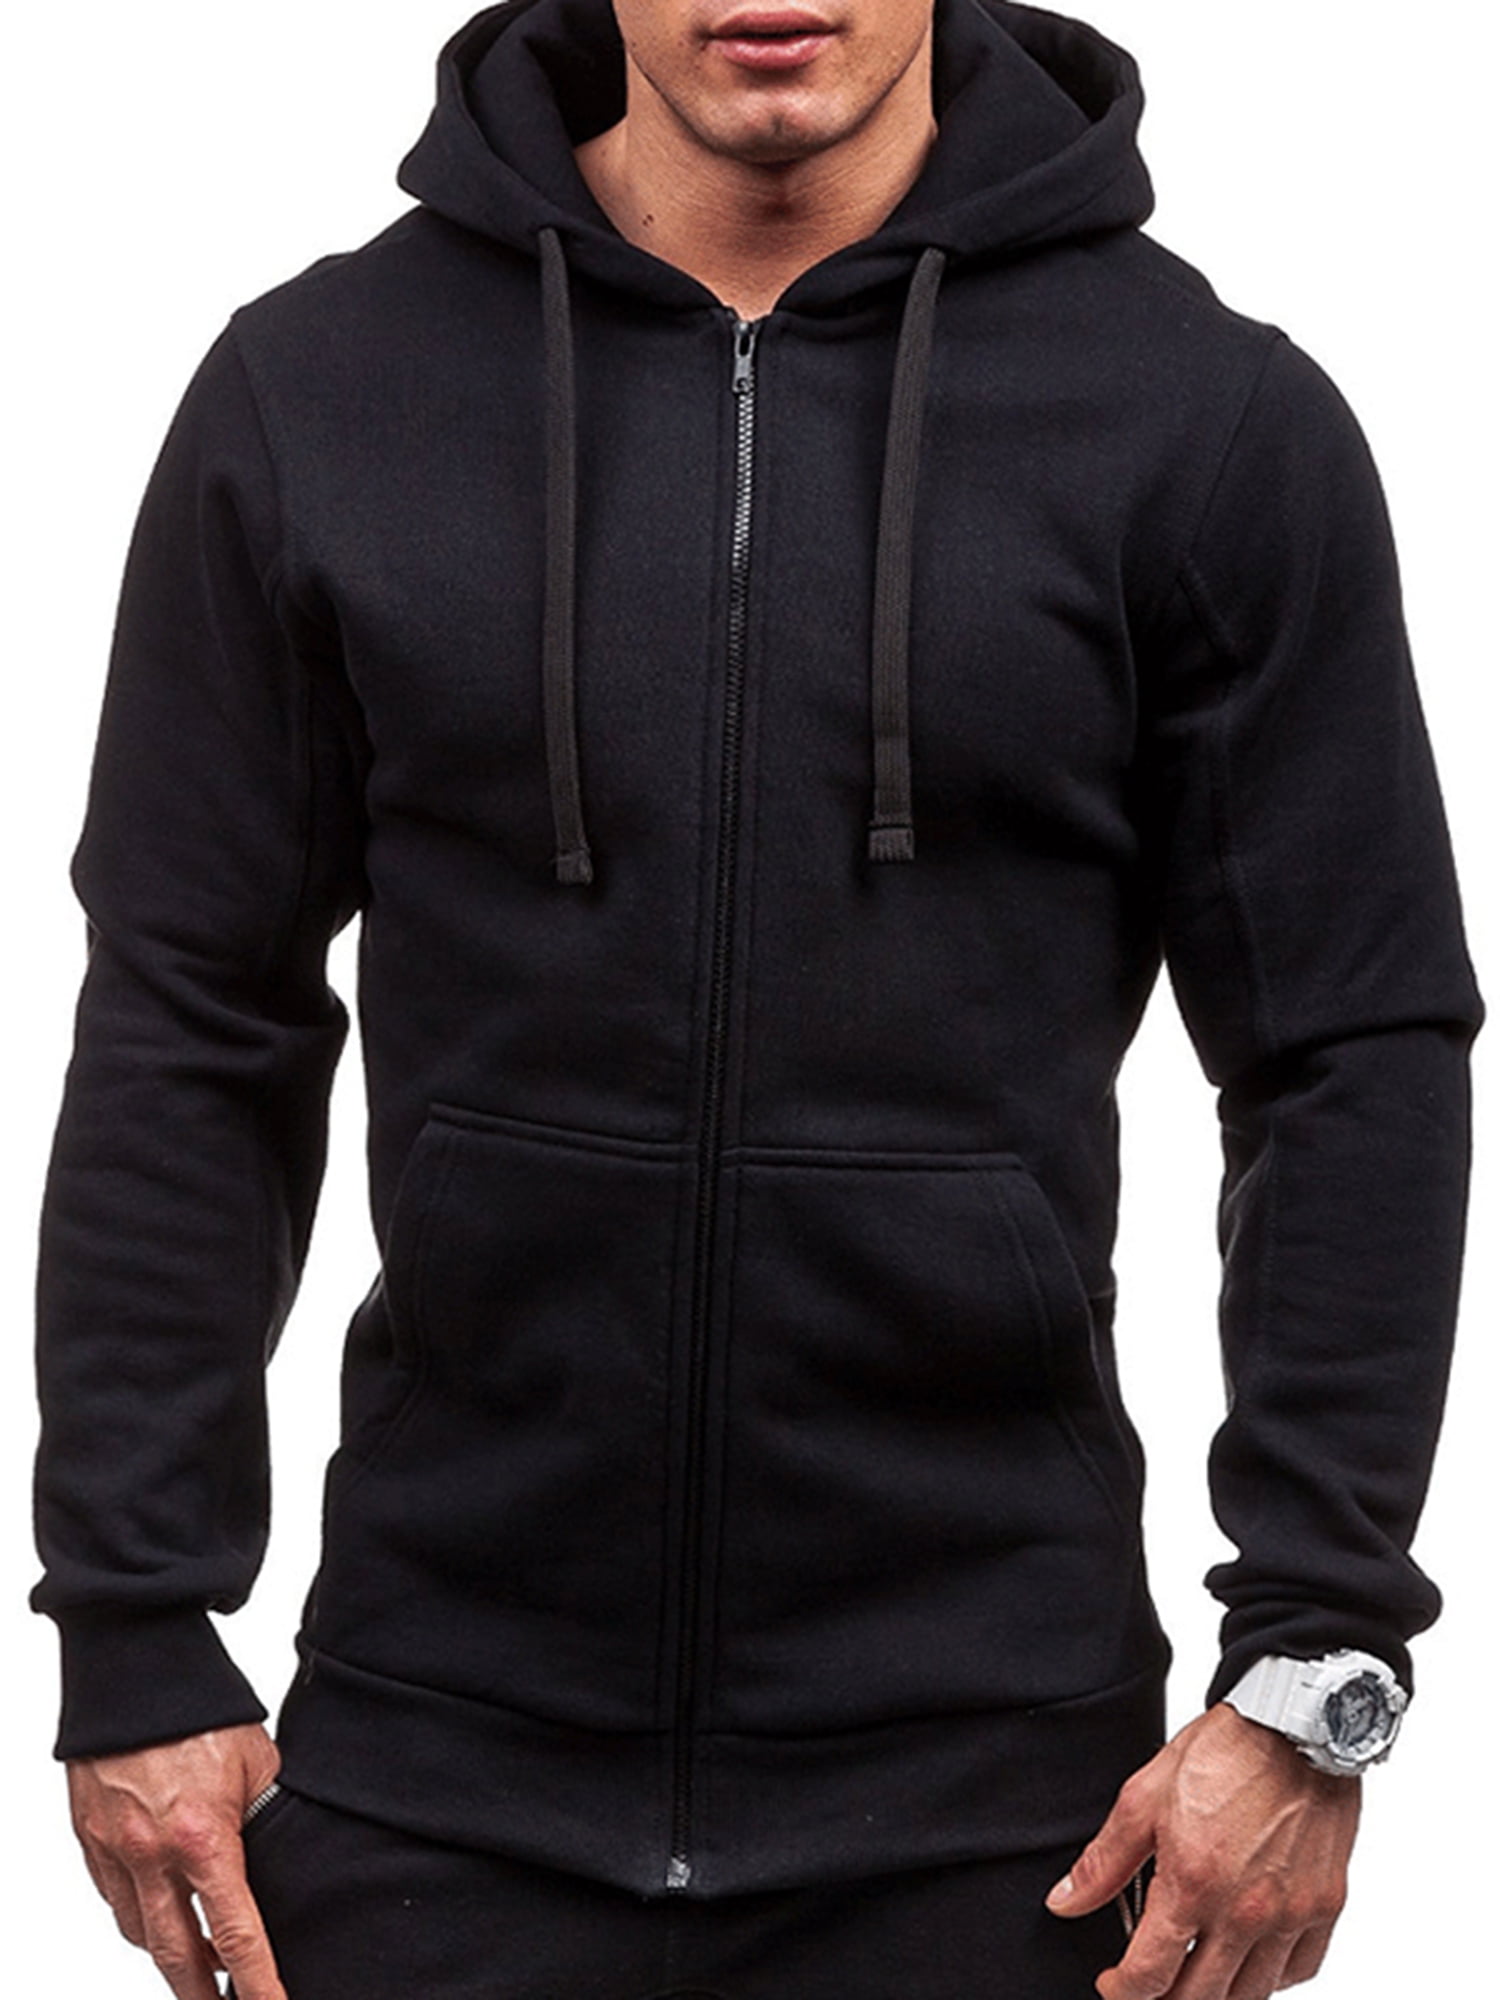 Details about   Mens Plain Hoodies Jacket Cotton Zipper Sweatshirts Soft Tracksuits Tops Hood 